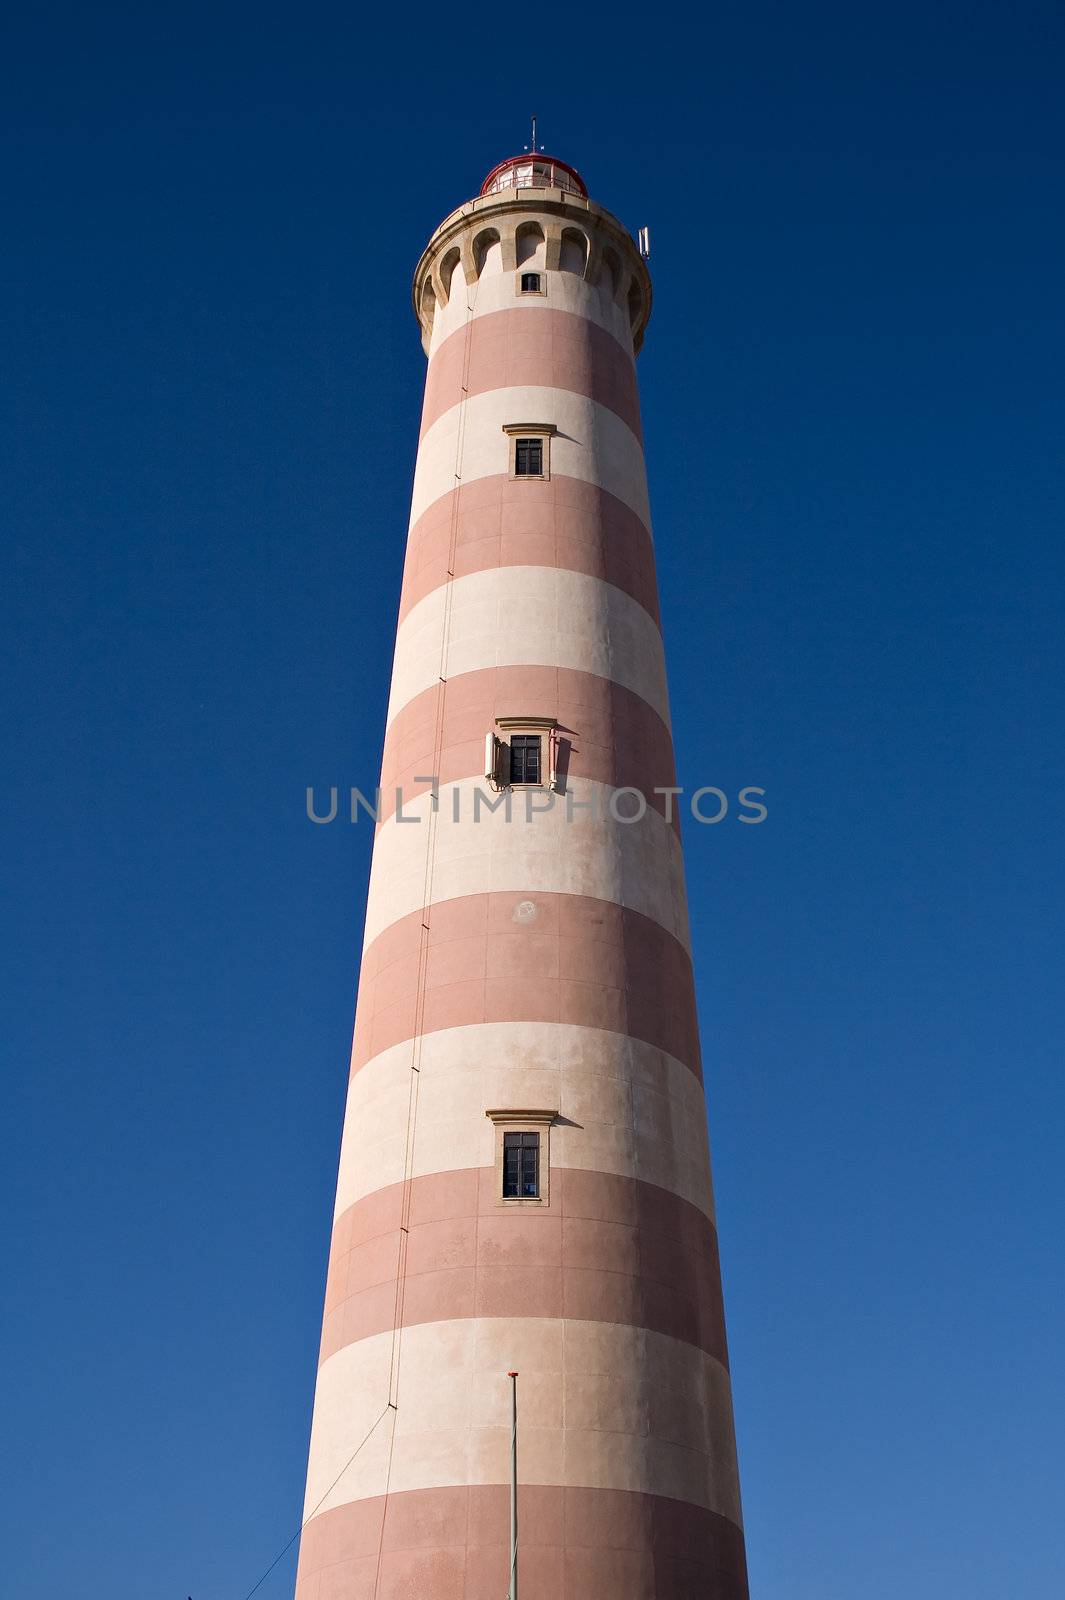 Lighthouse in Aveiro in Portugal - Barra beach